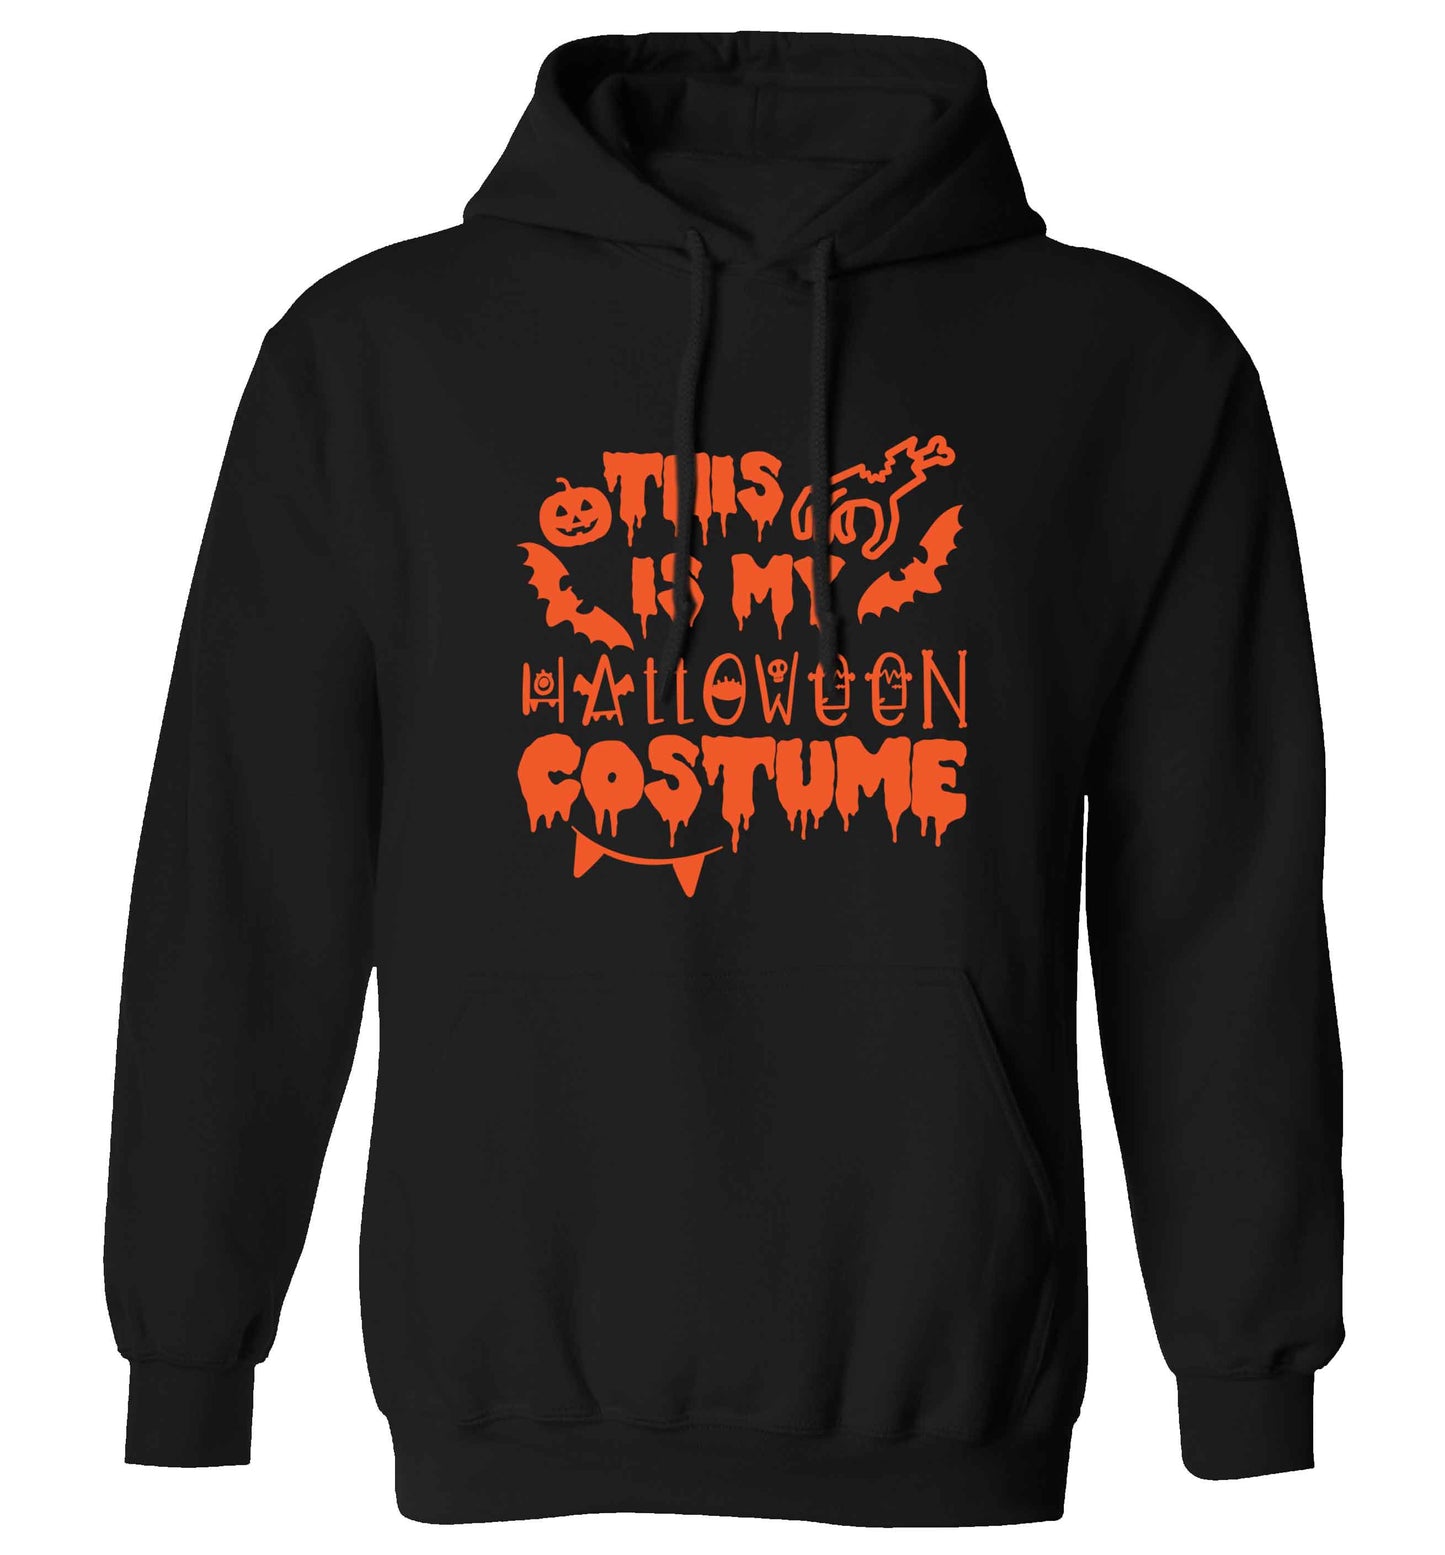 This is my halloween costume adults unisex black hoodie 2XL